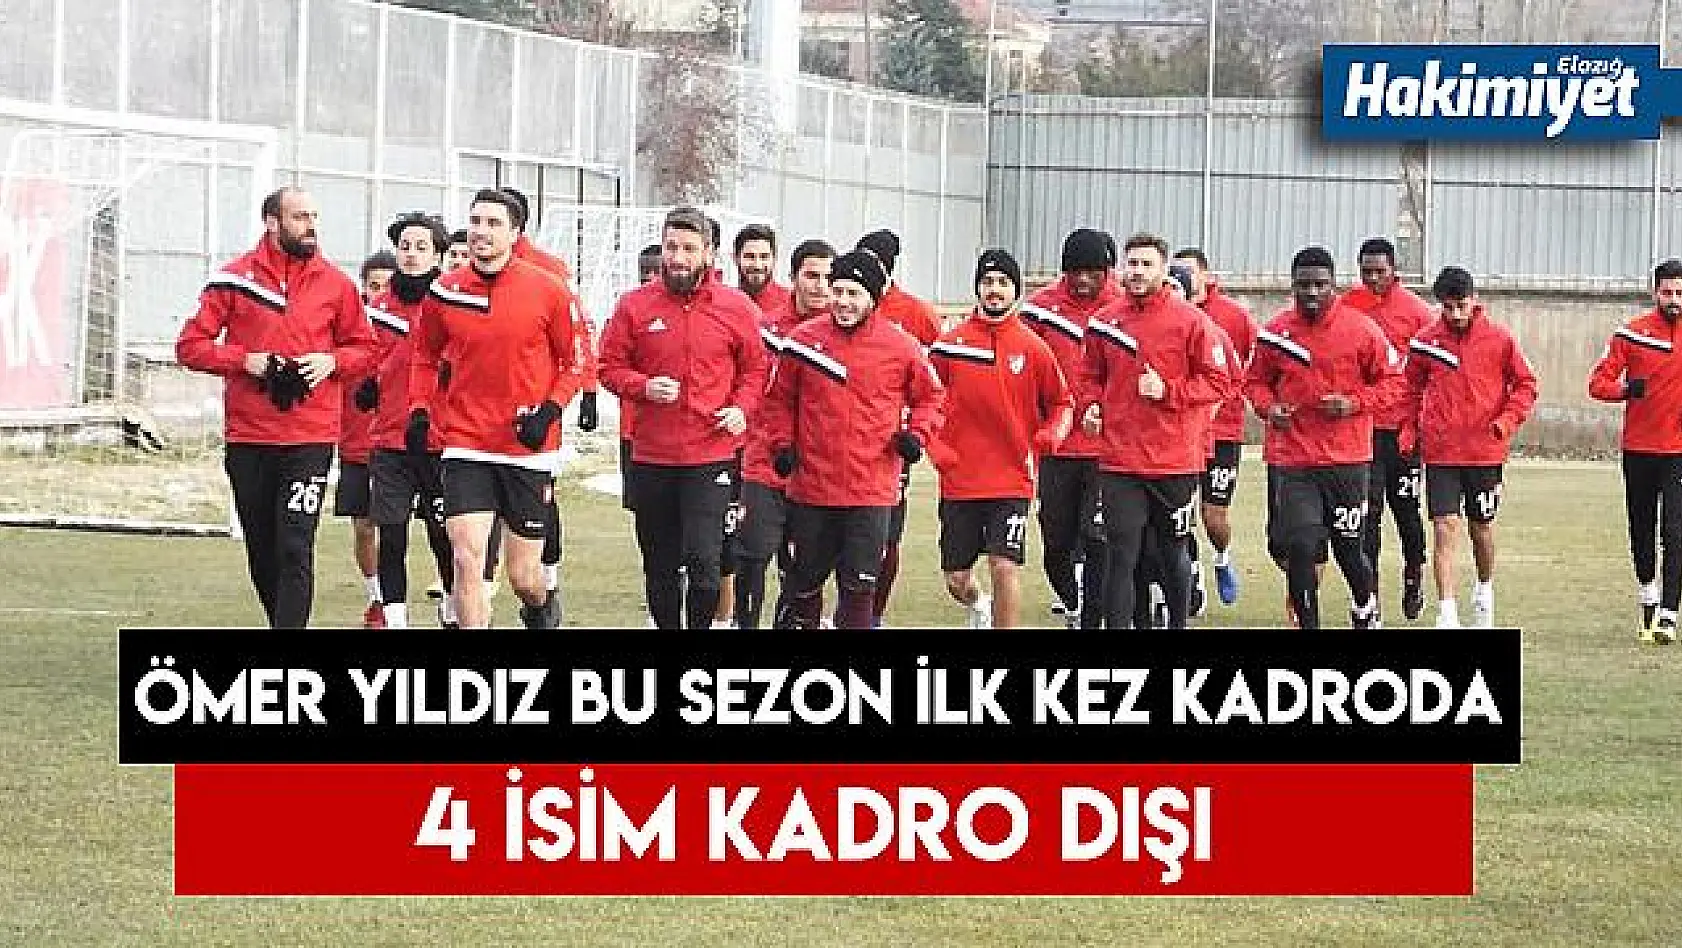 Elazığspor 20 futbolcuyla Hatay'da